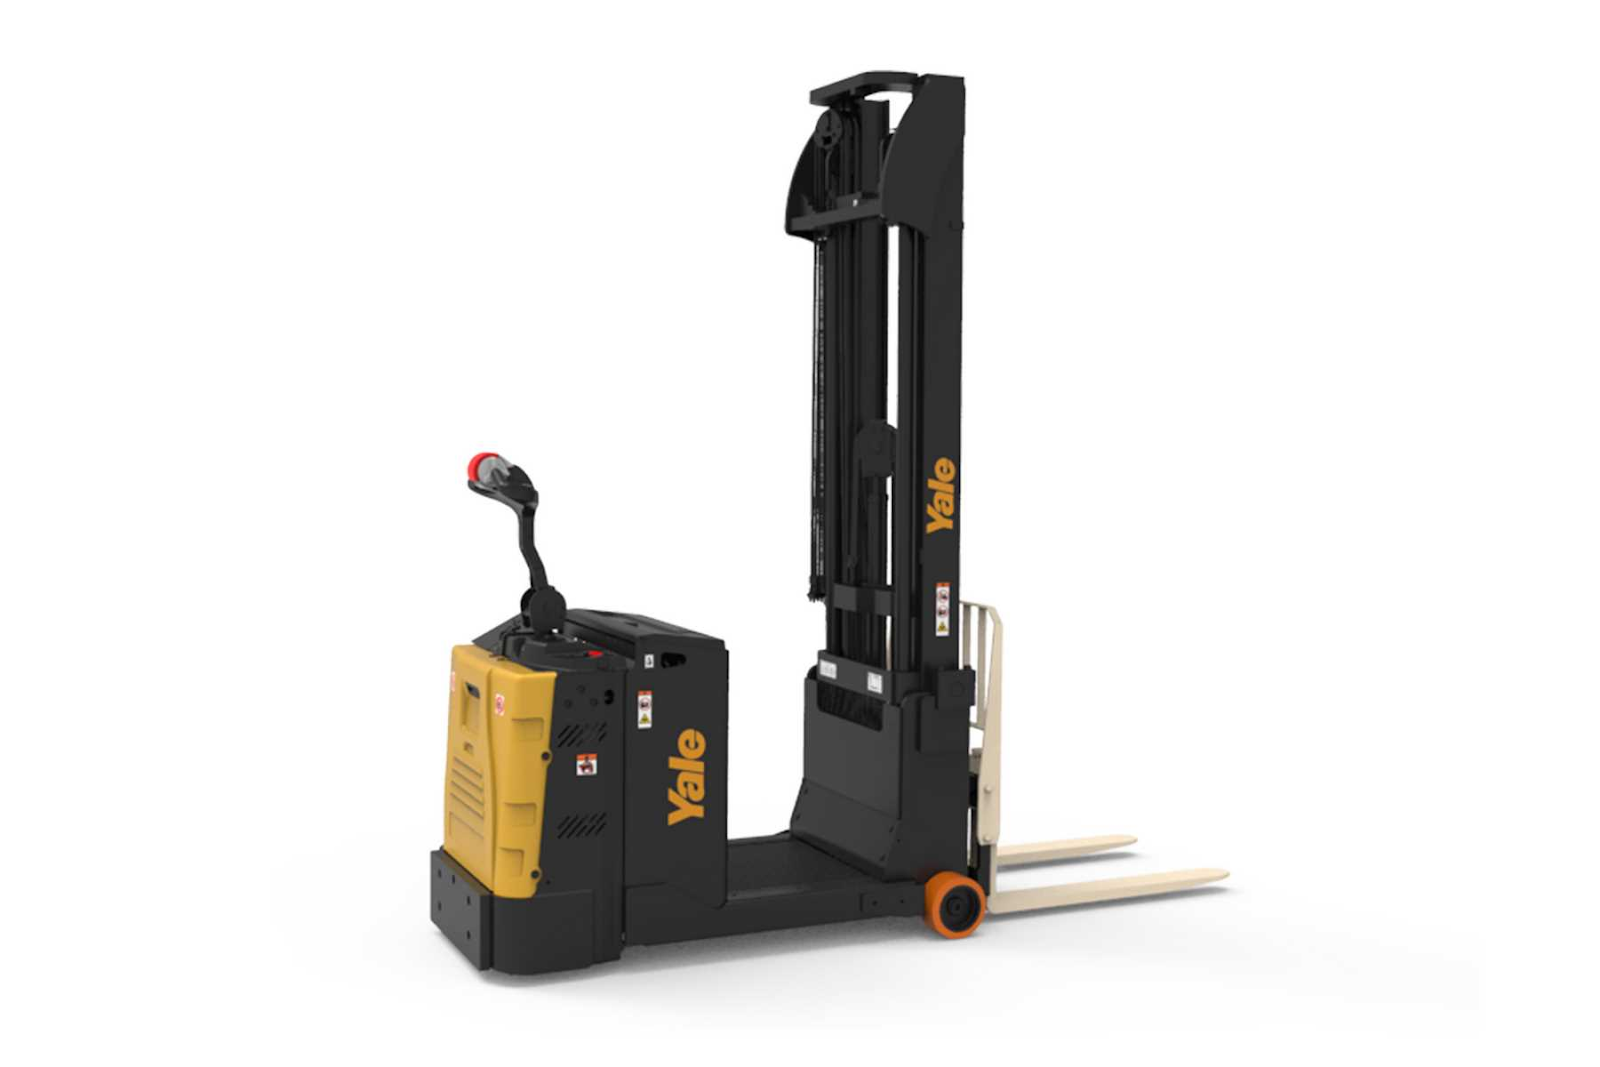 Forklifts provide durable, multi-functional tasks using